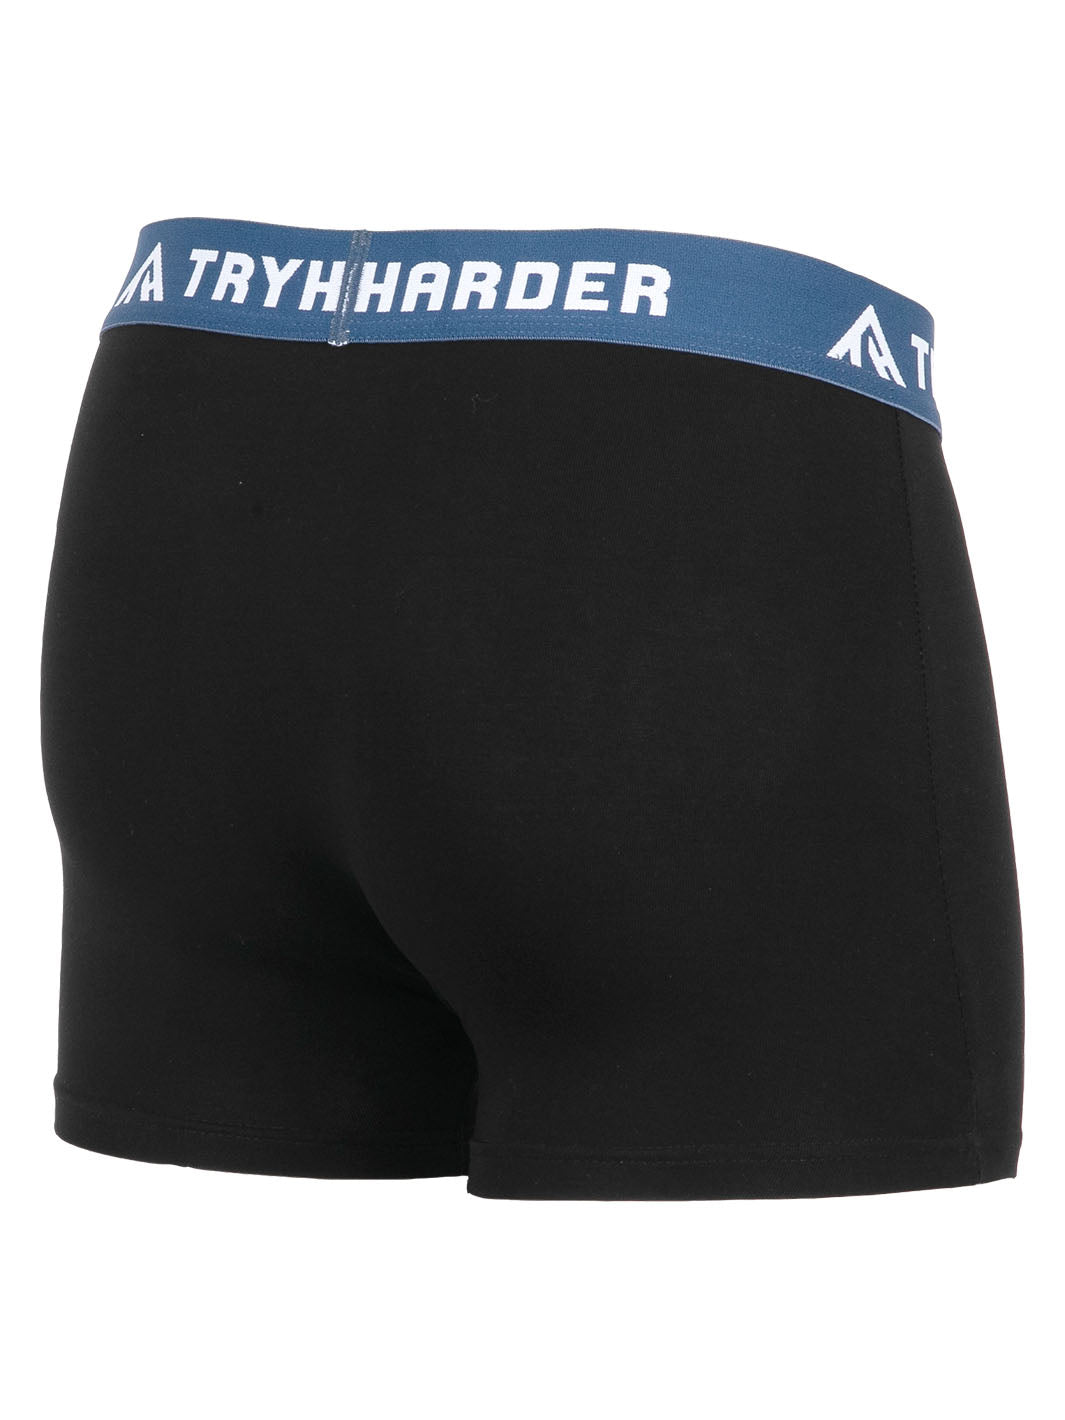 TRYHARDER - Boxer - Black 2 pack